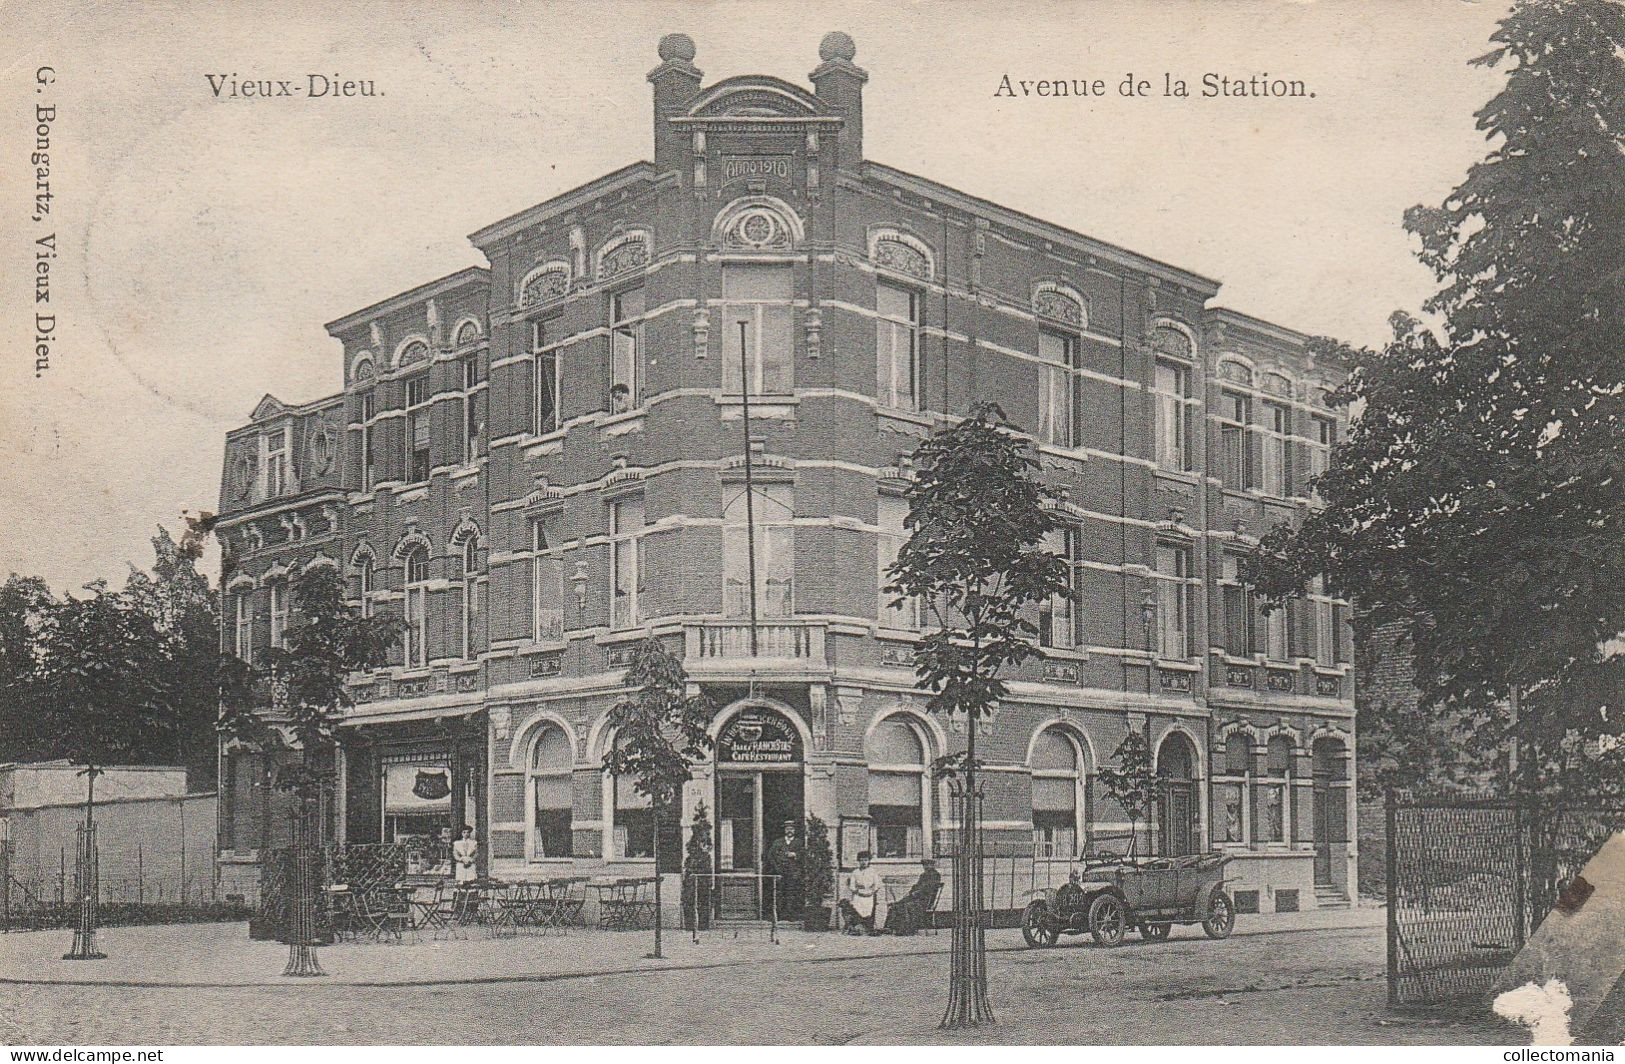 3 Oude Postkaarten  Mortsel Oude God  Statielei  Café Restaurant In Den Boer 1913 Café Minerva - Mortsel